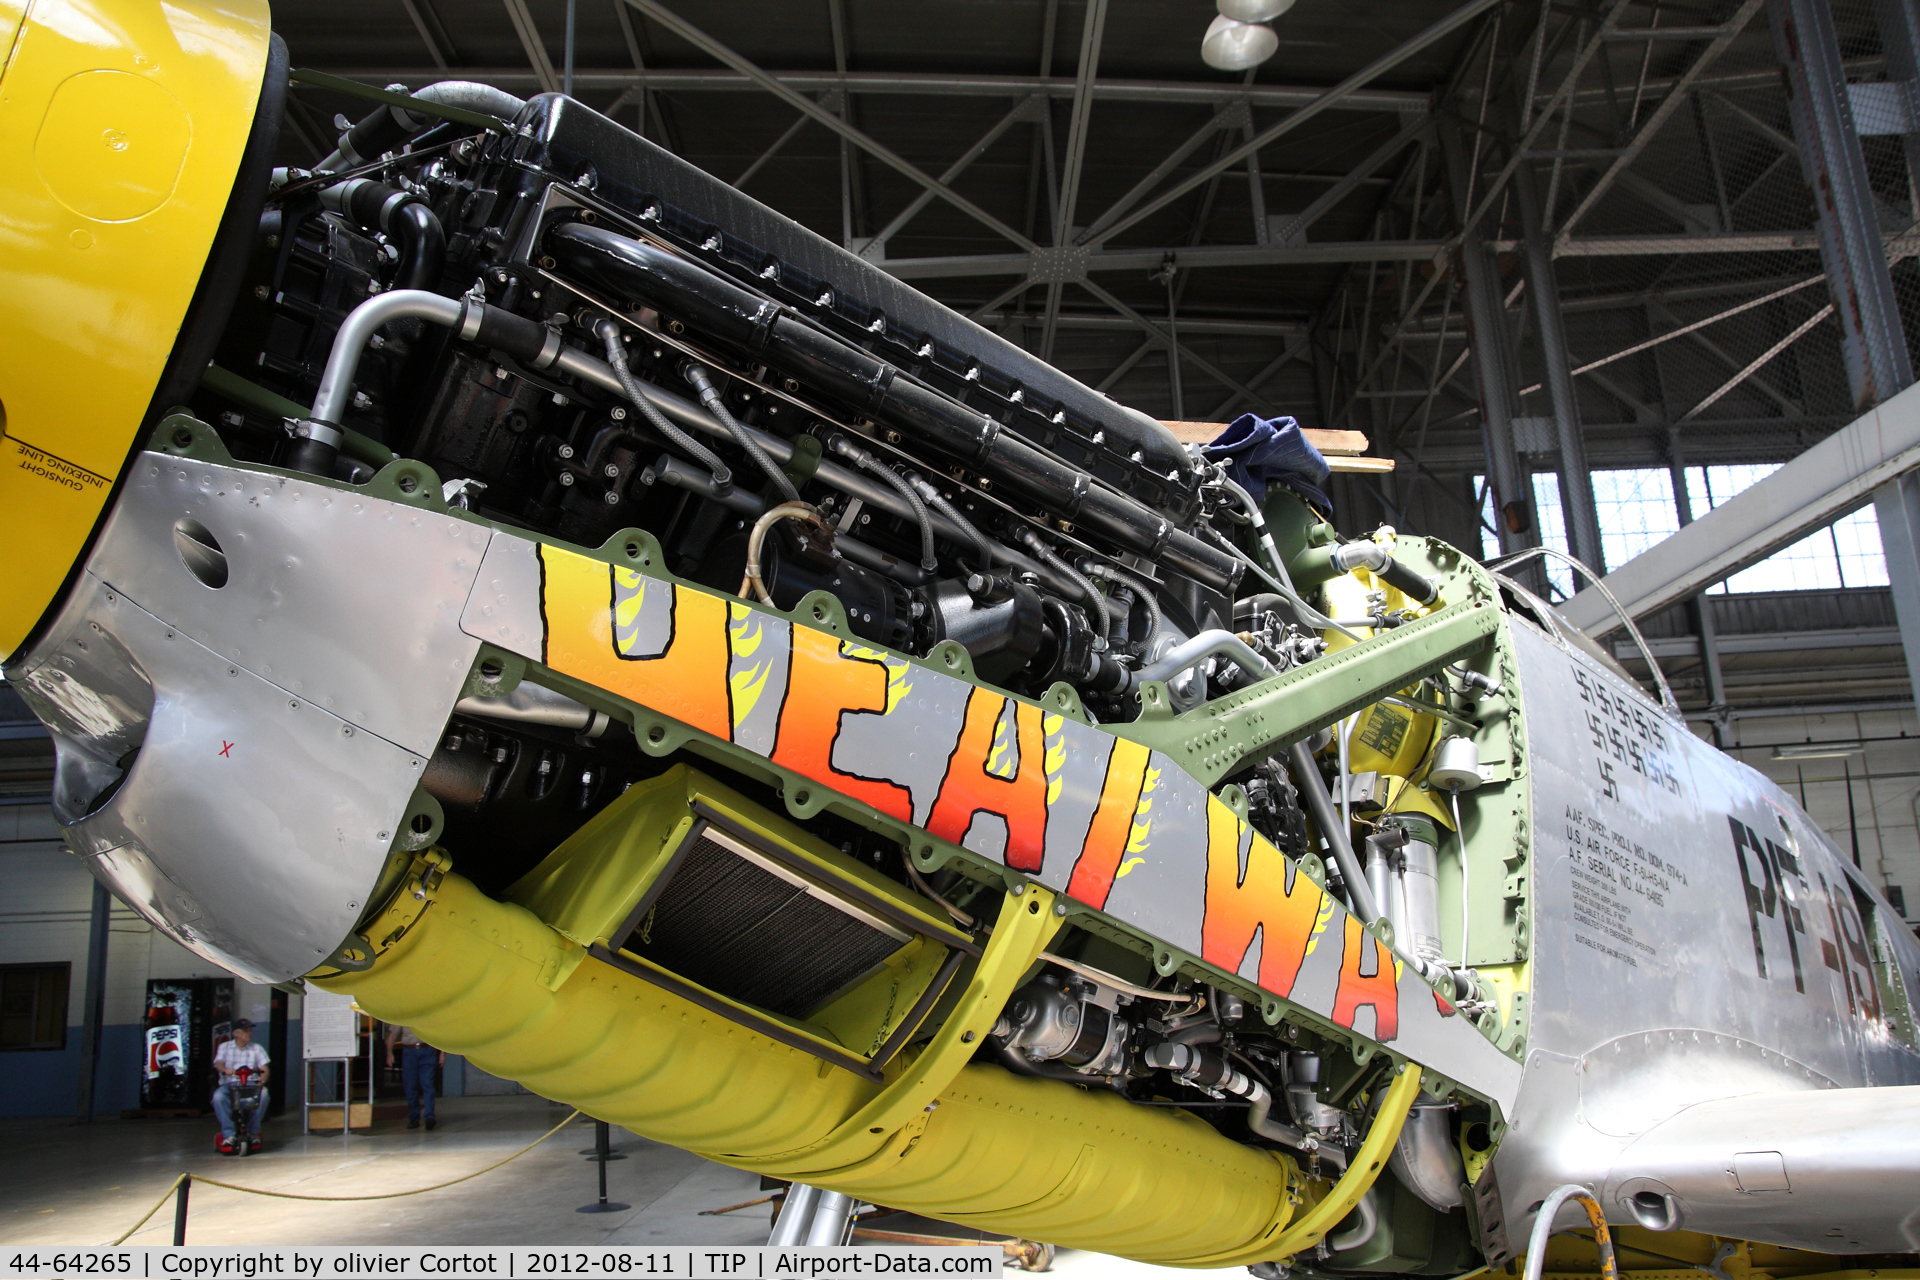 44-64265, 1944 North American P-51H Mustang C/N 126-37691, the work of the museum volonteers is amazing